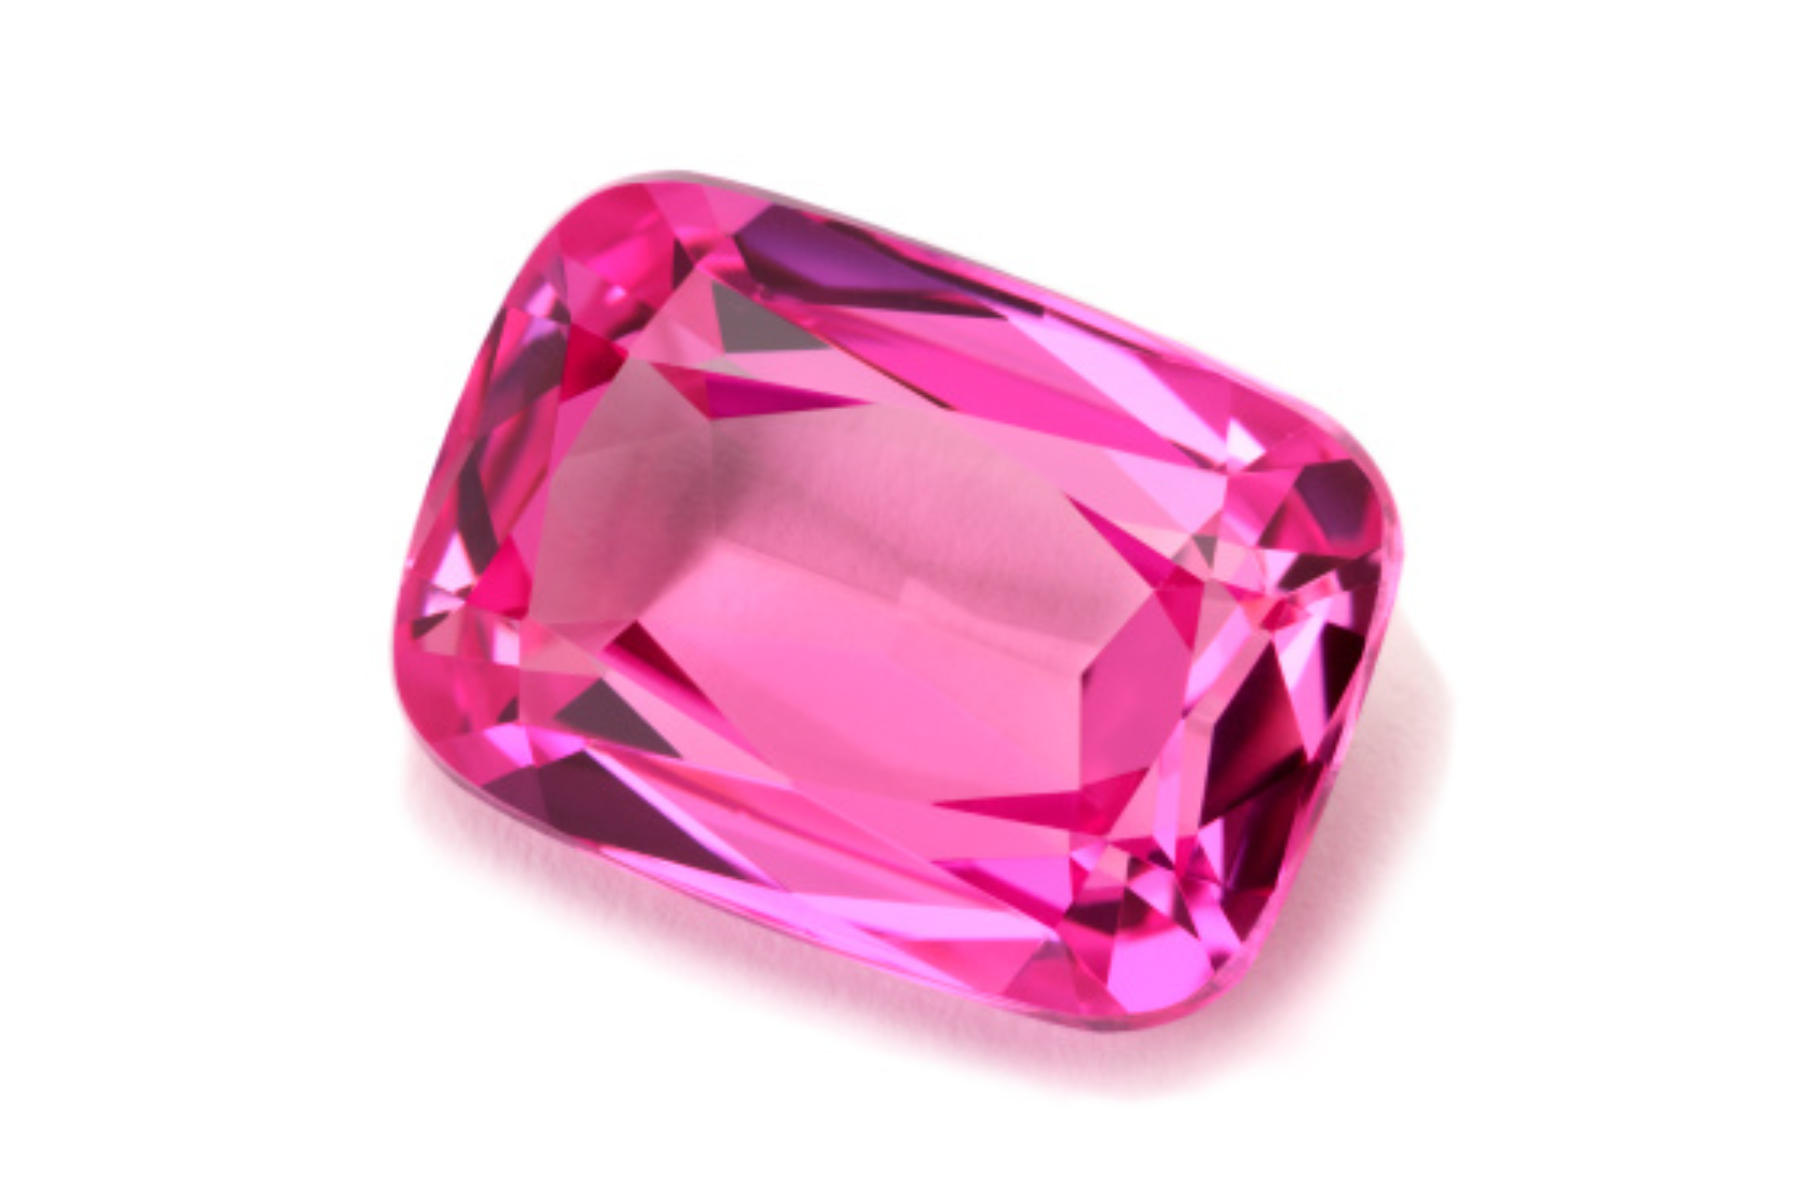 Rectangular pink tourmaline stone